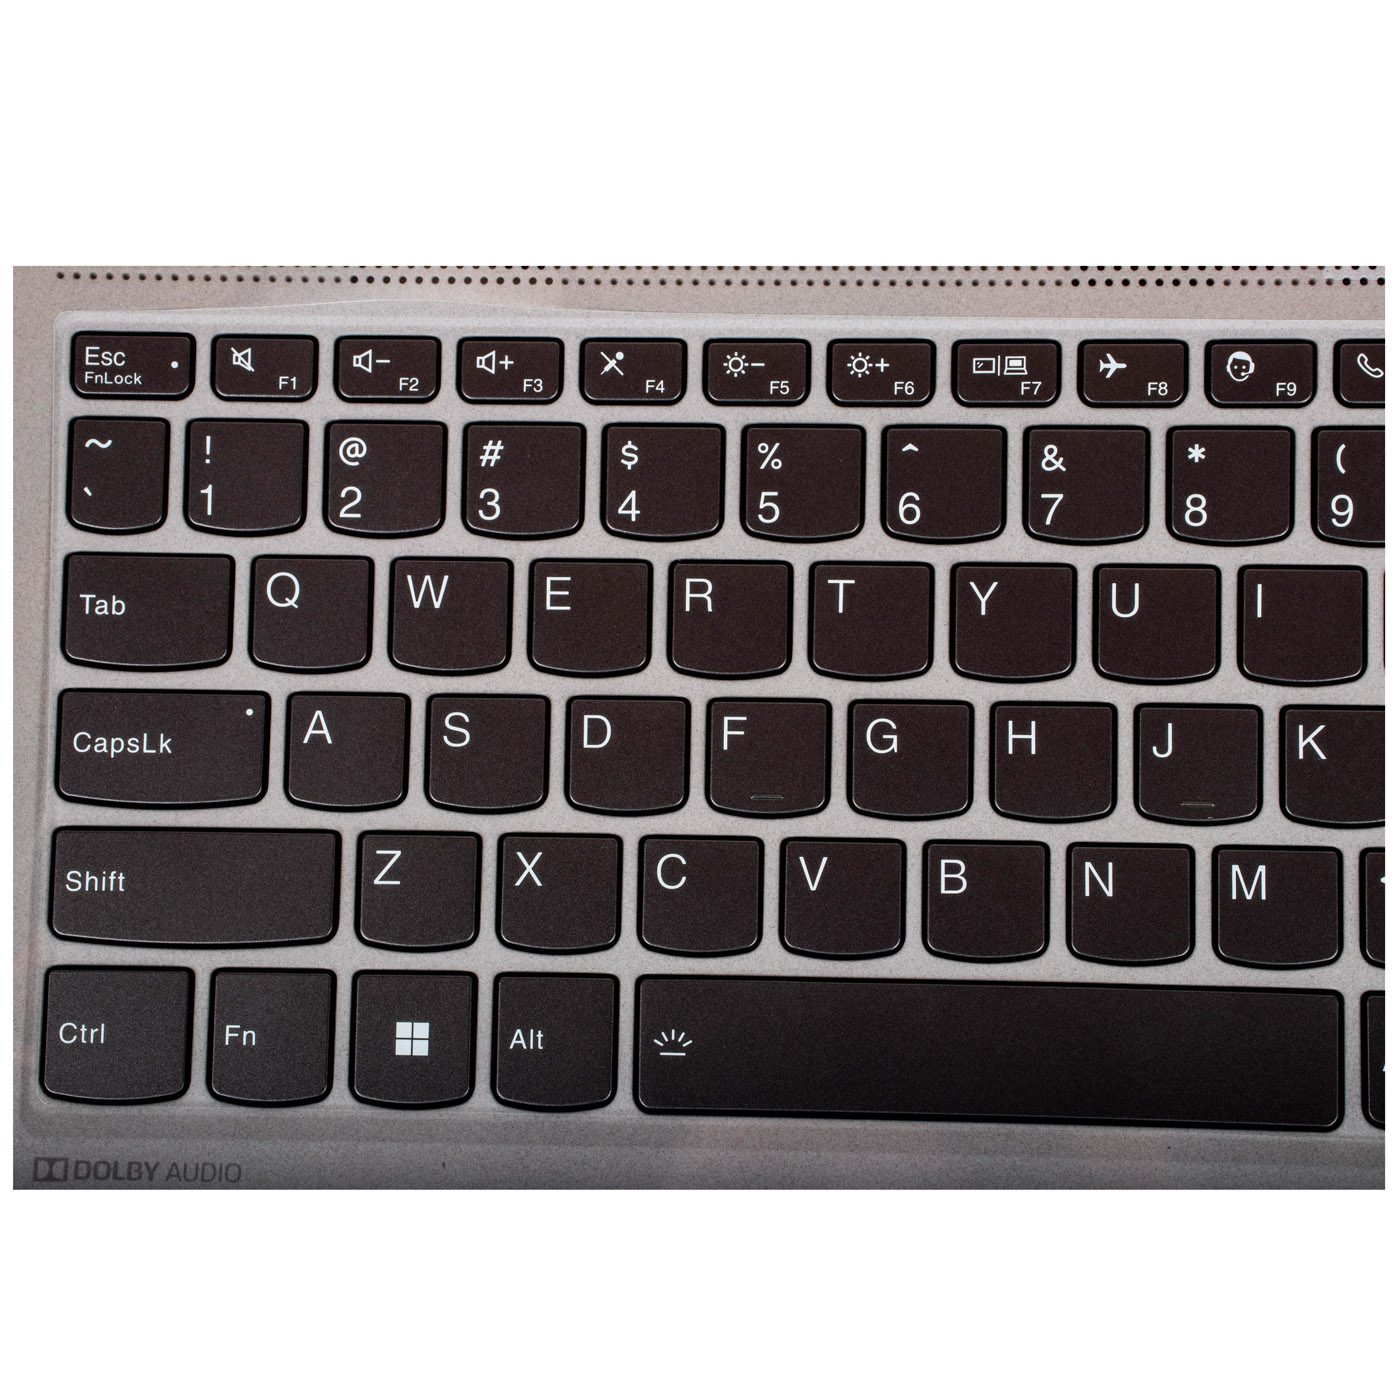 Palmrest klawiatura Lenovo IdeaPad 5 15 srebrny